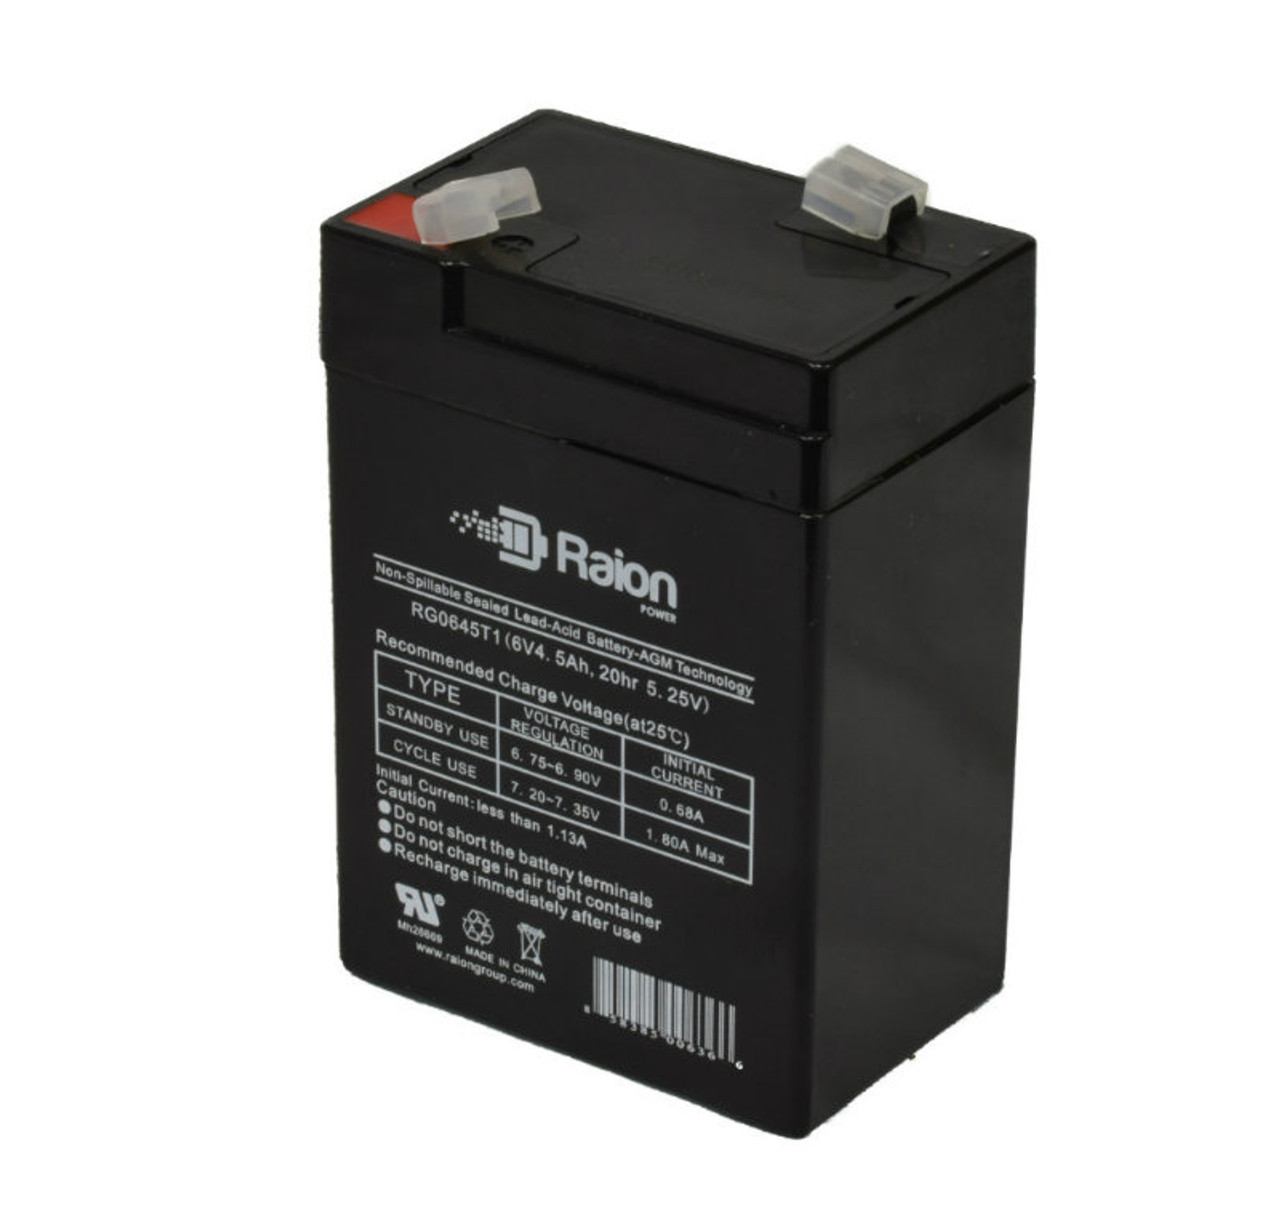 Raion Power RG0645T1 6V 4.5Ah Replacement Battery Cartridge for Douglas Guardian DG6-4E